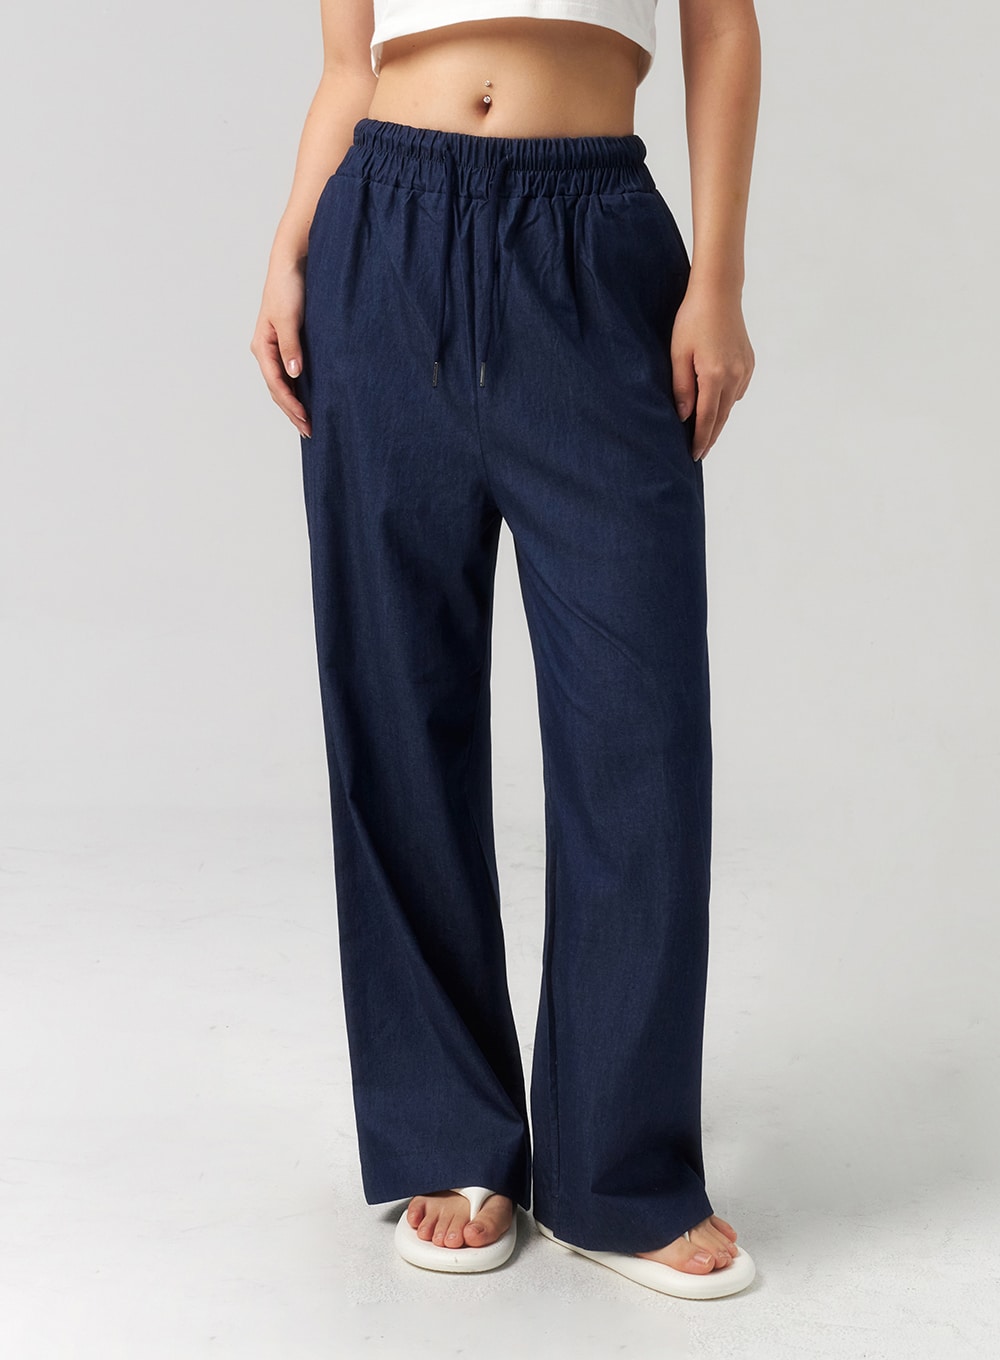 NWT Alexander Wang Tapered Logo Track Pants Denim Jeans Joggers Aged Grey S  | eBay